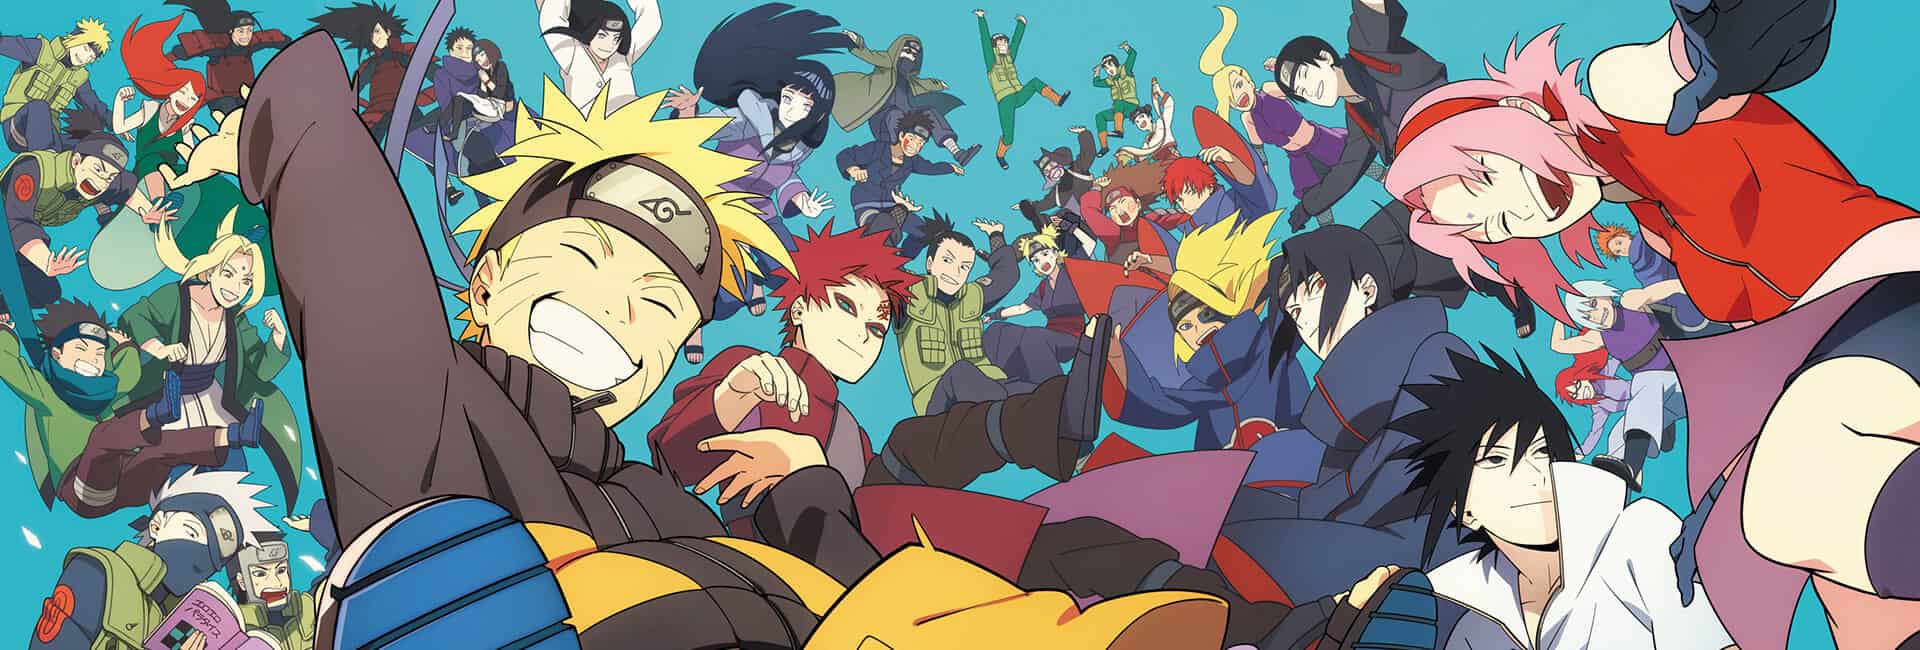 Personagens de Naruto Shippuden reunidos